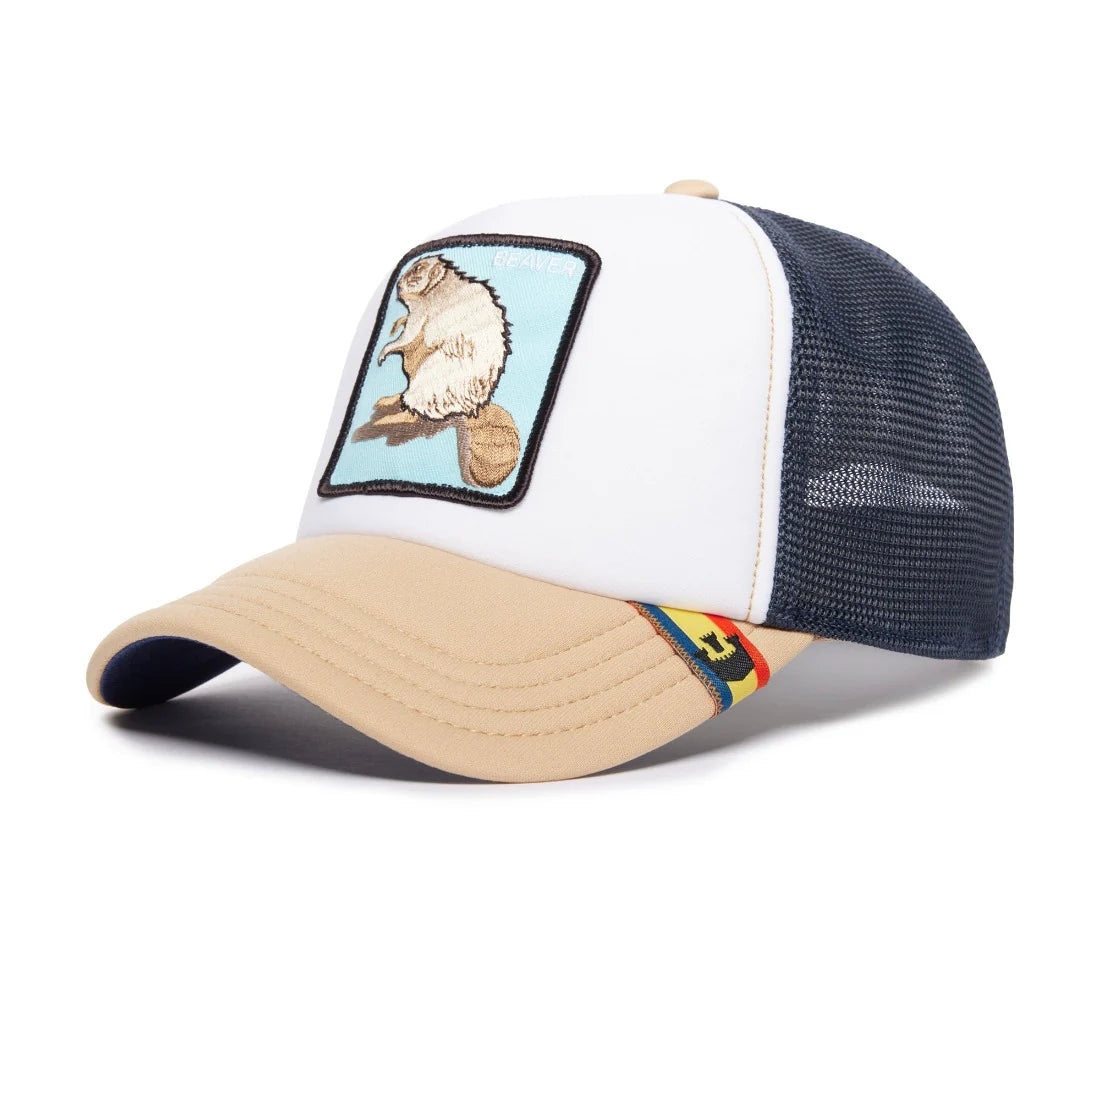 'Goorin Bros. First Beaver Trucker Hat' in 'White' colour